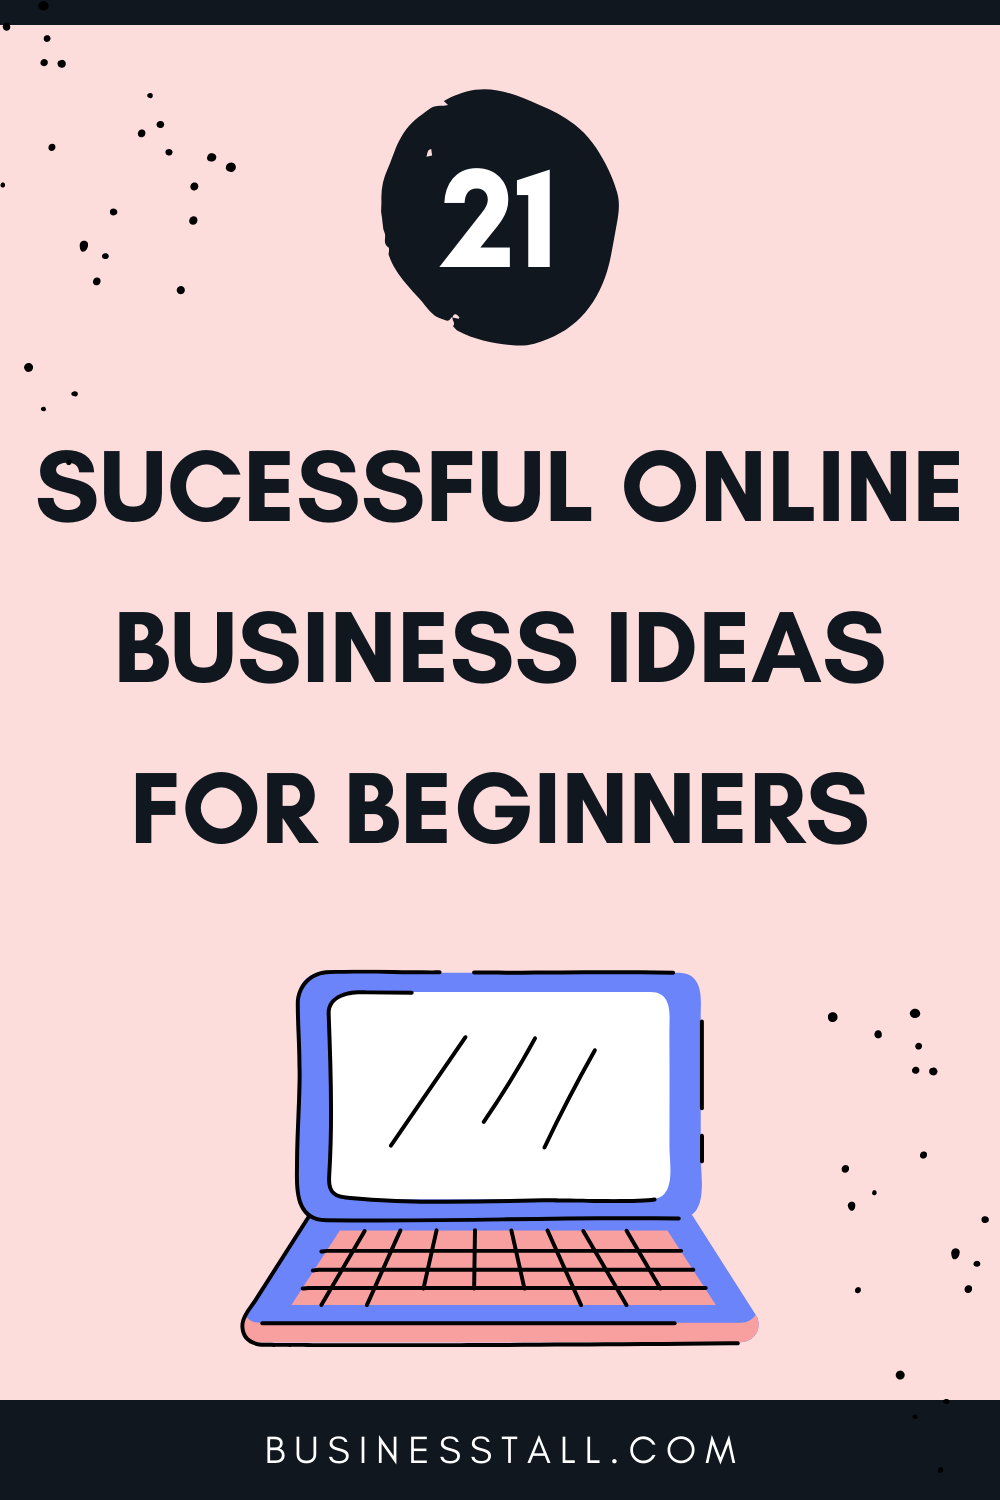 Online Business ideas for beginners